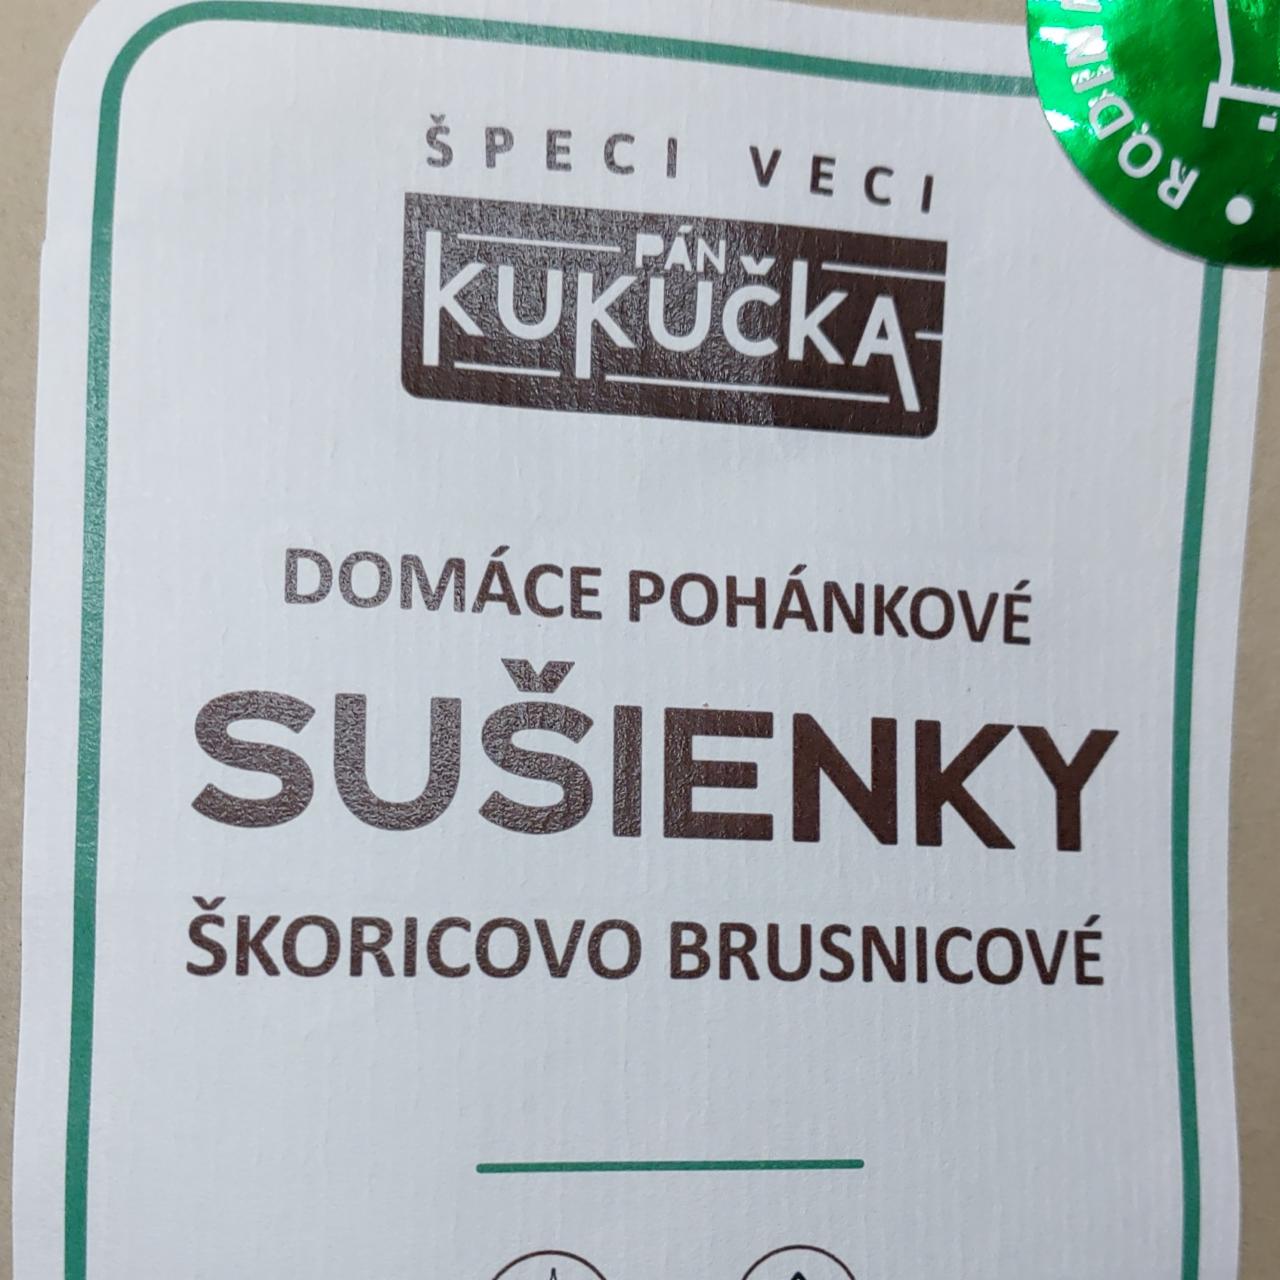 Fotografie - Domáce pohánkové Sušienky škoricovo brusnicové Pán Kukučka